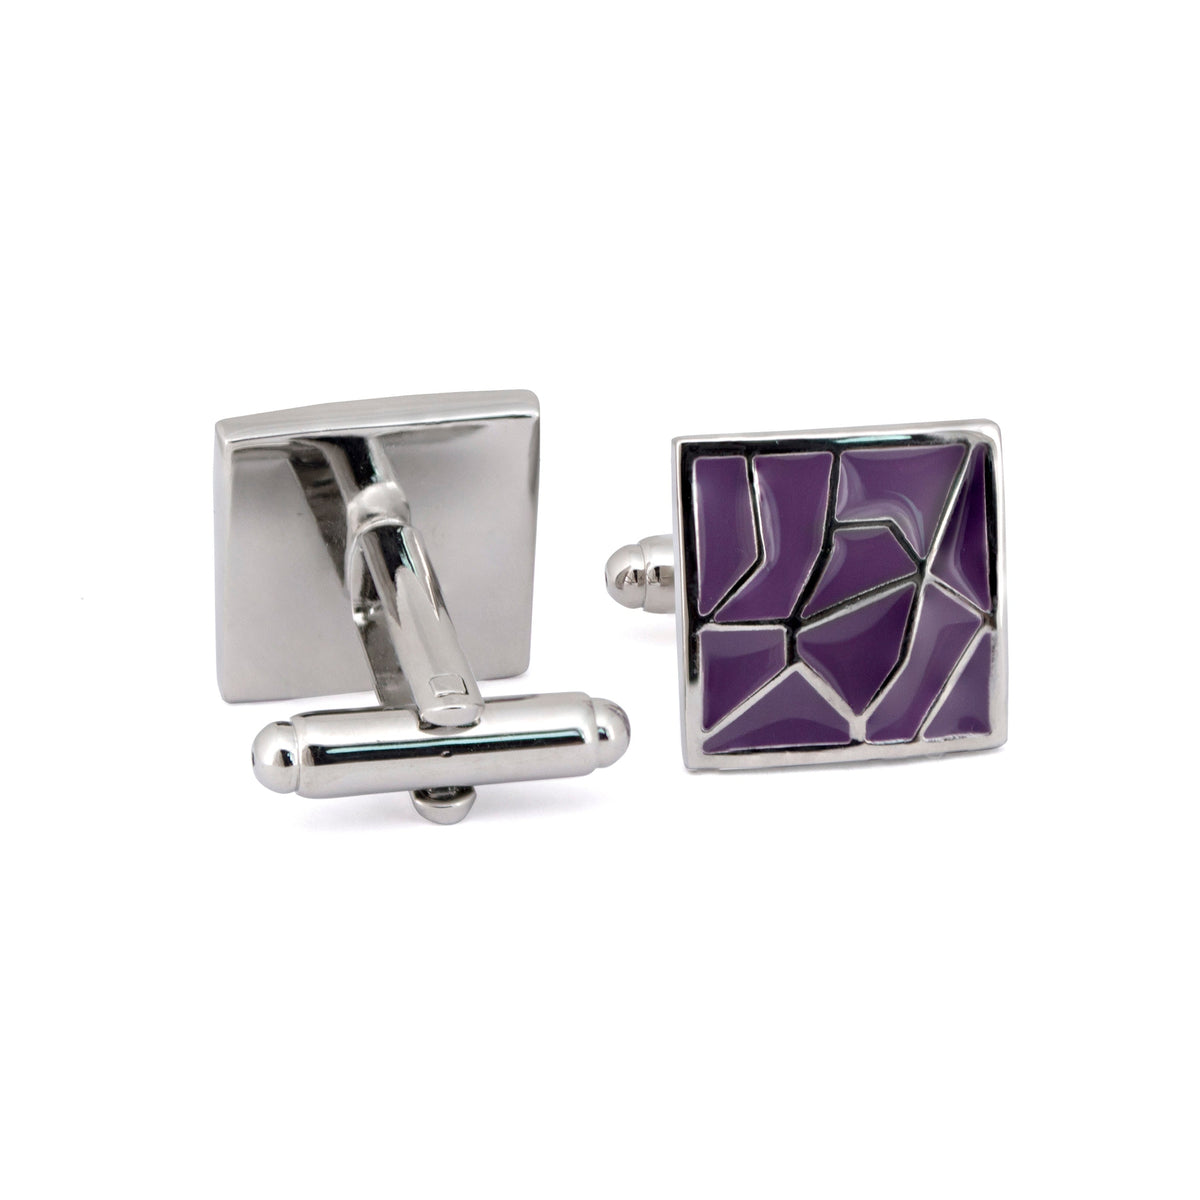 Silver with Purple Enamel Crack Design Cufflinks-Classic Cufflinks-MarZthomson-Cufflinks.com.sg